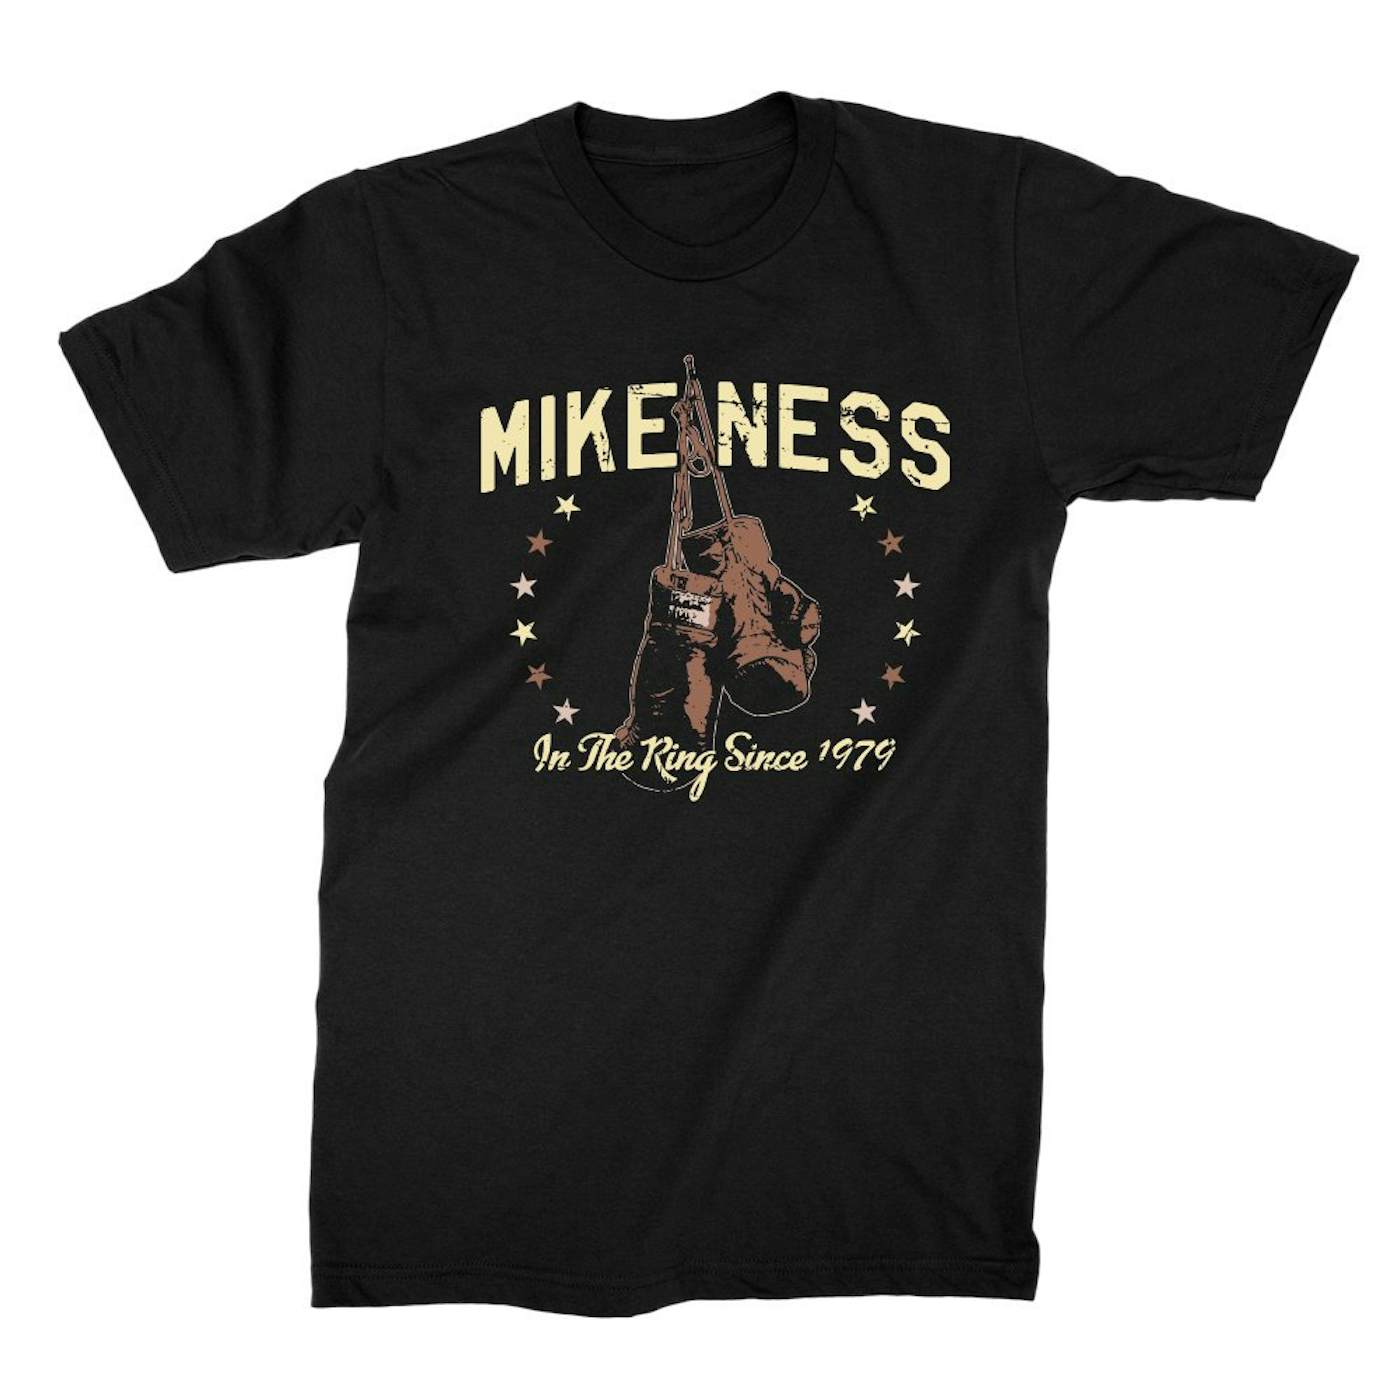 Mike Ness Boxing T-Shirt (Black)